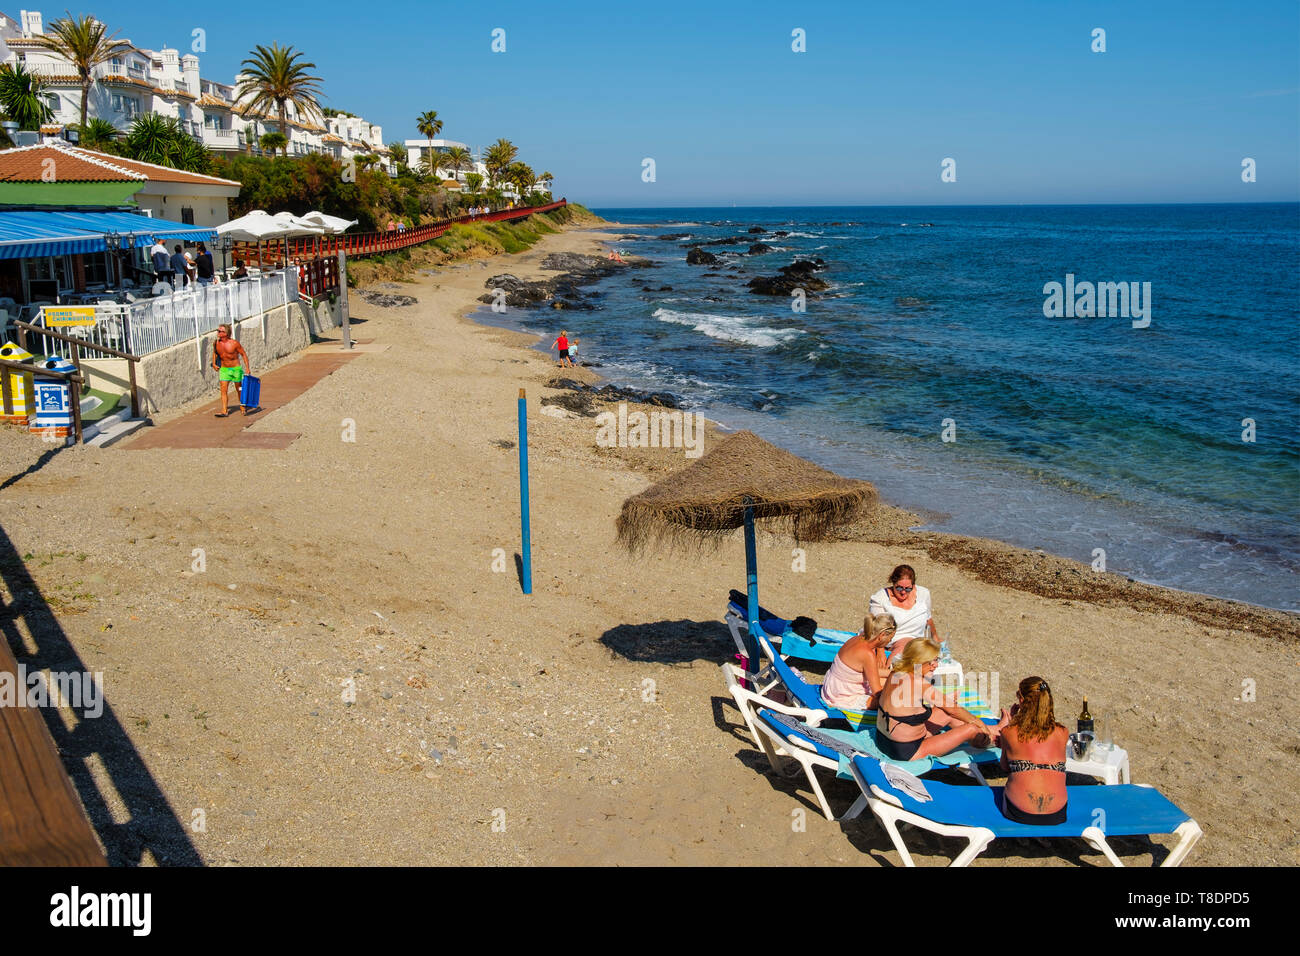 Tourists on the beach. Mijas Costa, Malaga province, Costa del Sol, Mediterrenean sea, Andalusia, Spain Europe Stock Photo